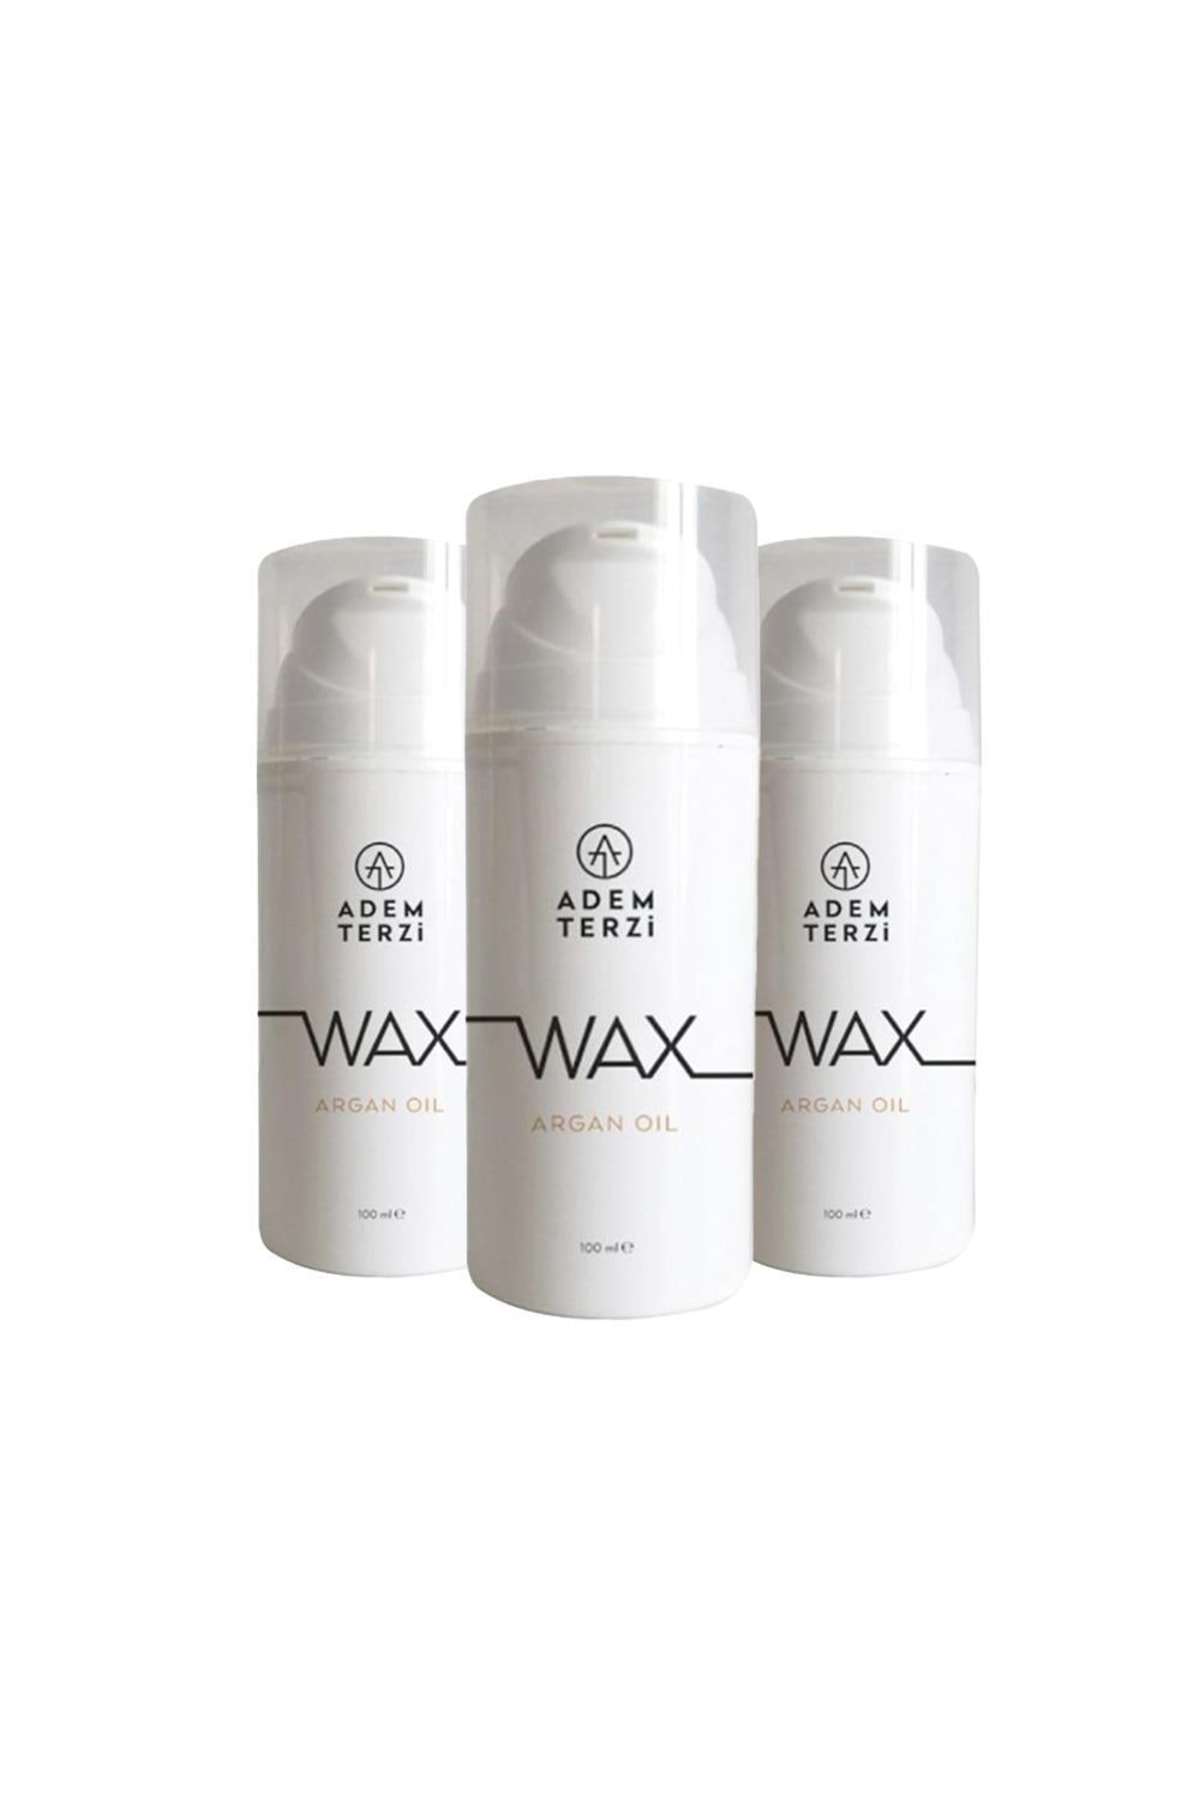 Adem Terzi Hair Wax Argan Oil 100 Ml X 3